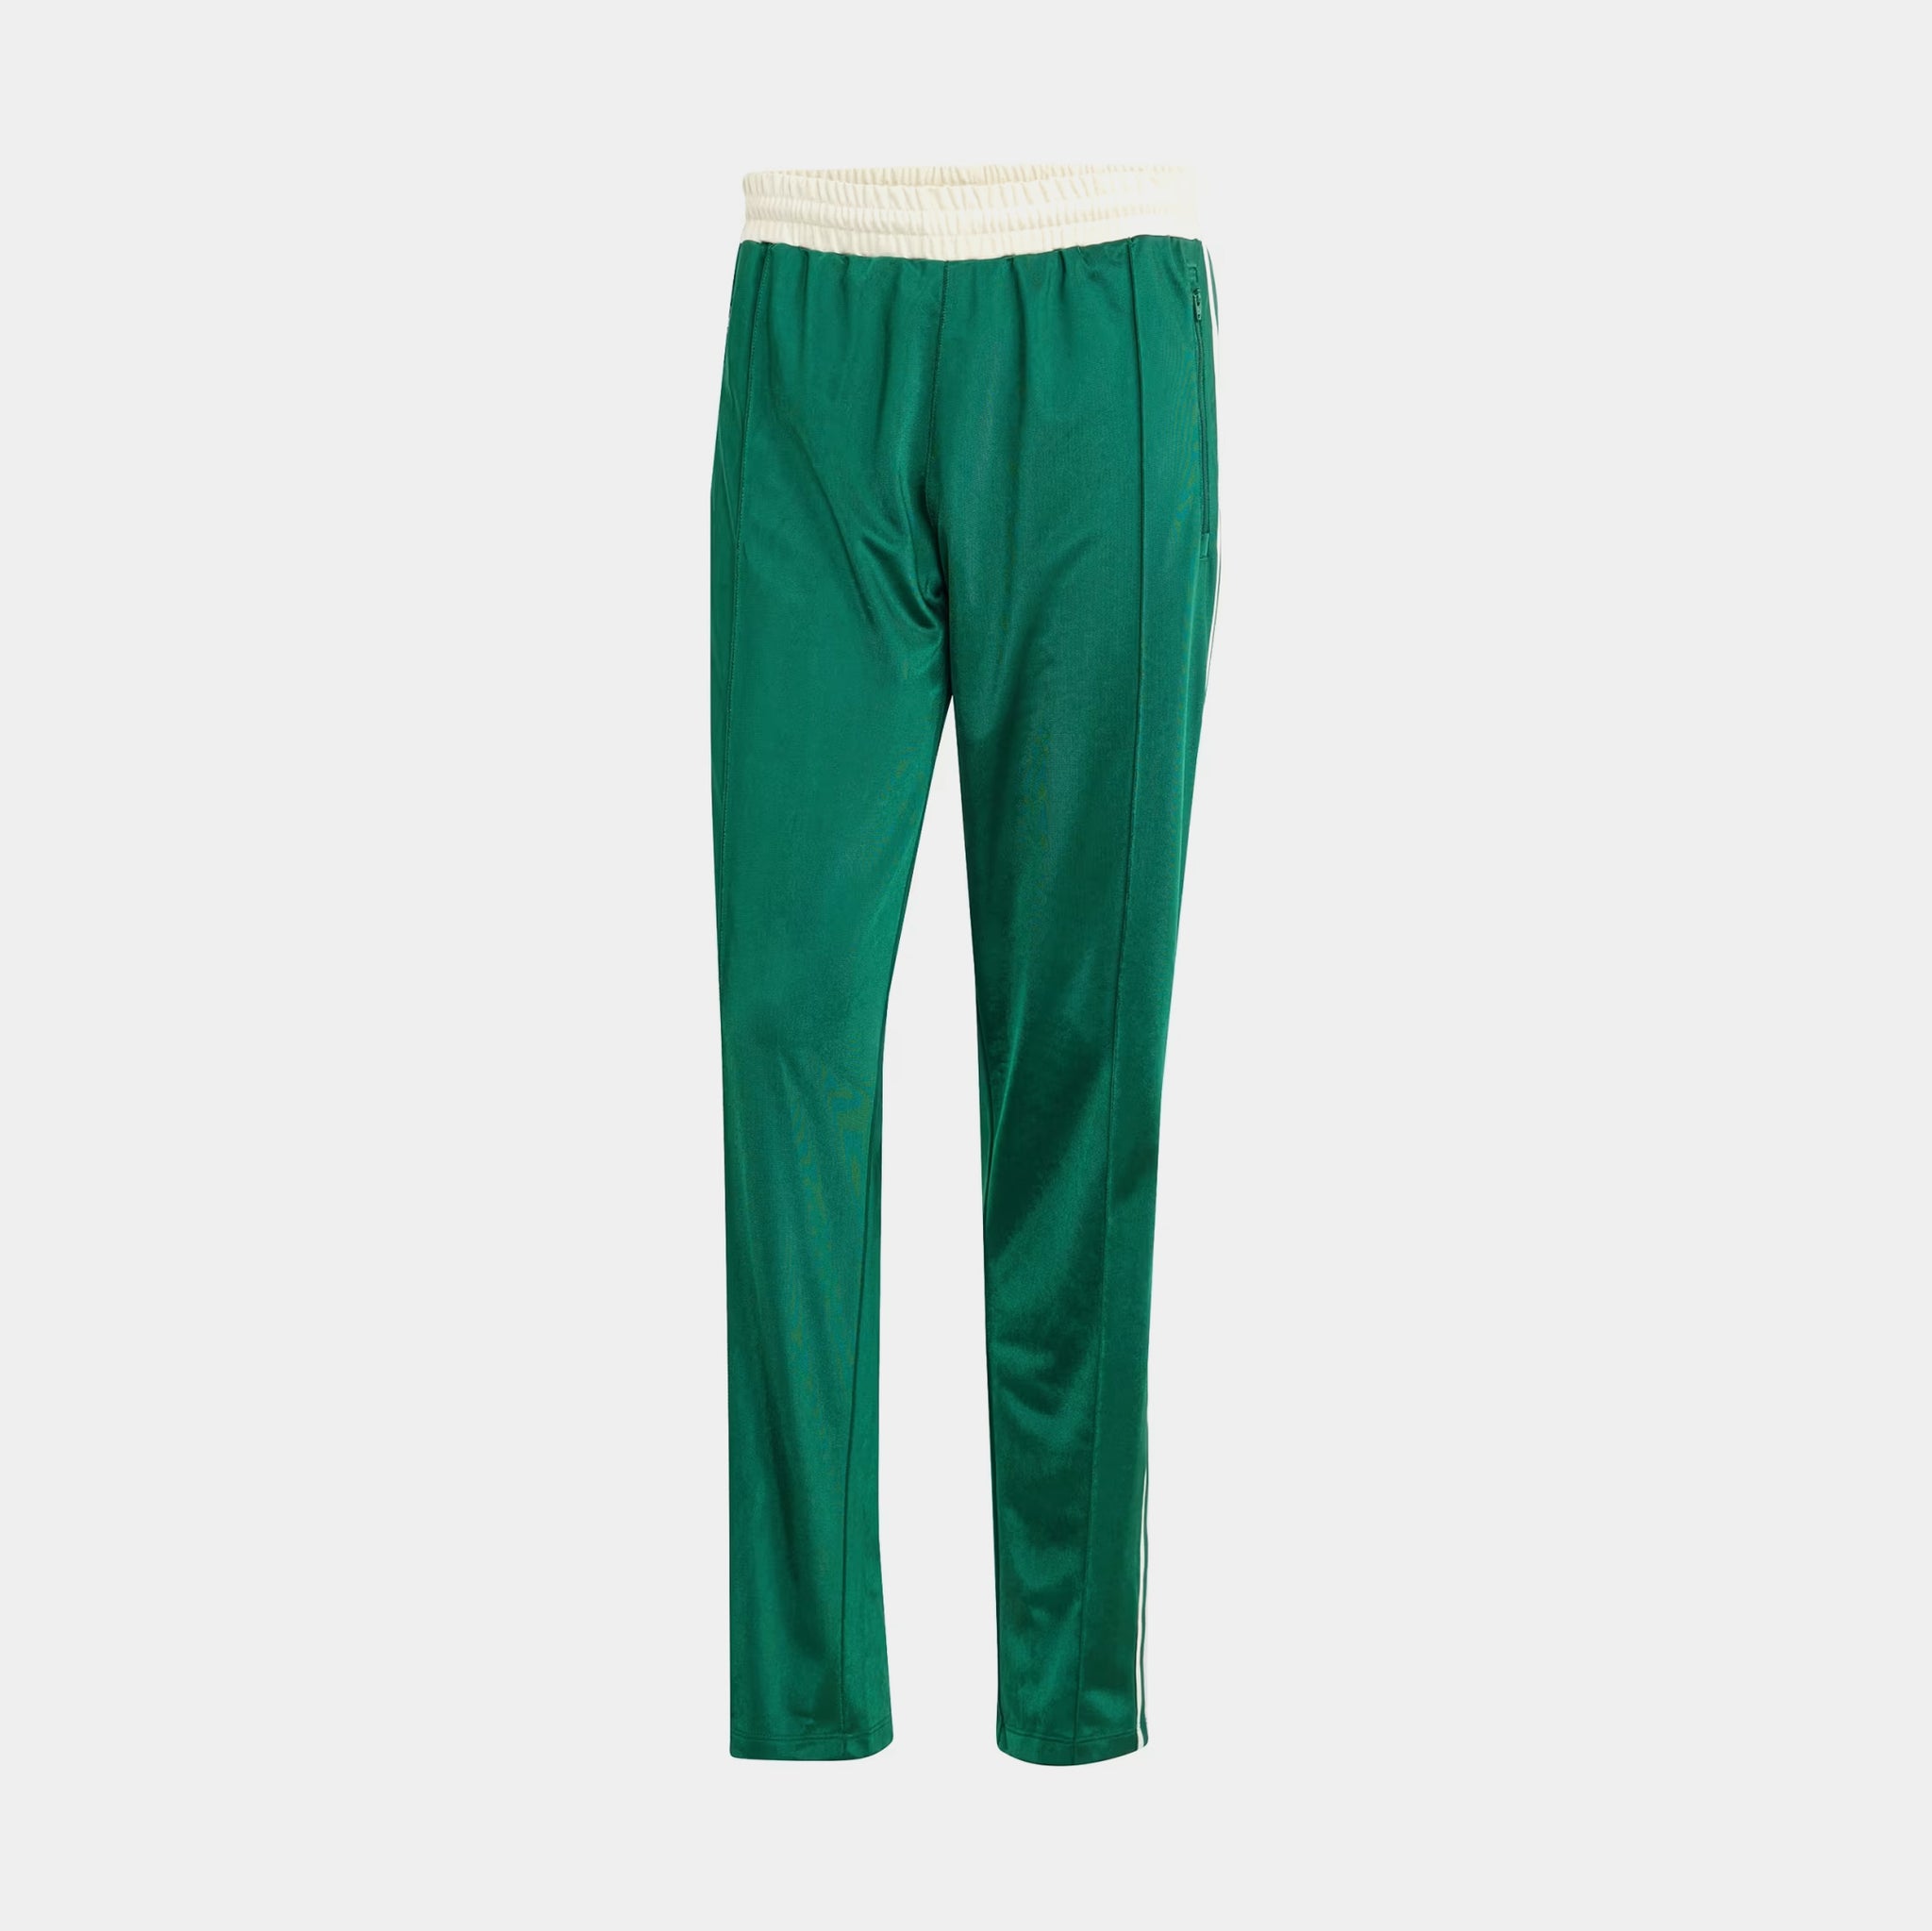 Adicolor Archive Mens Track Pants (Green/Beige)